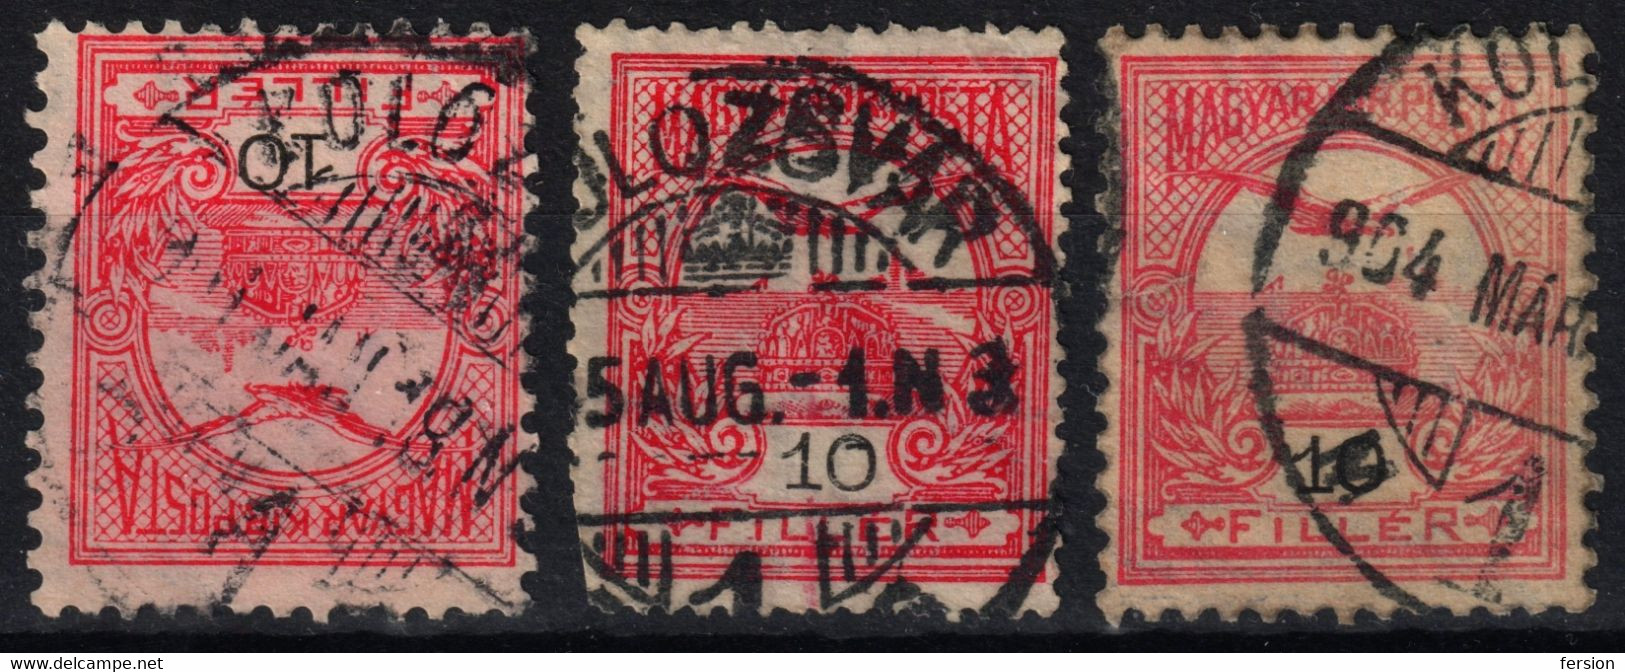 KOLOZSVÁR CLUJ-NAPOCA Postmark LOT TURUL WMK 3. 1900 Hungary Romania Banat Transylvania KOLOZS County KuK K.u.K 10 Fill - Transylvania